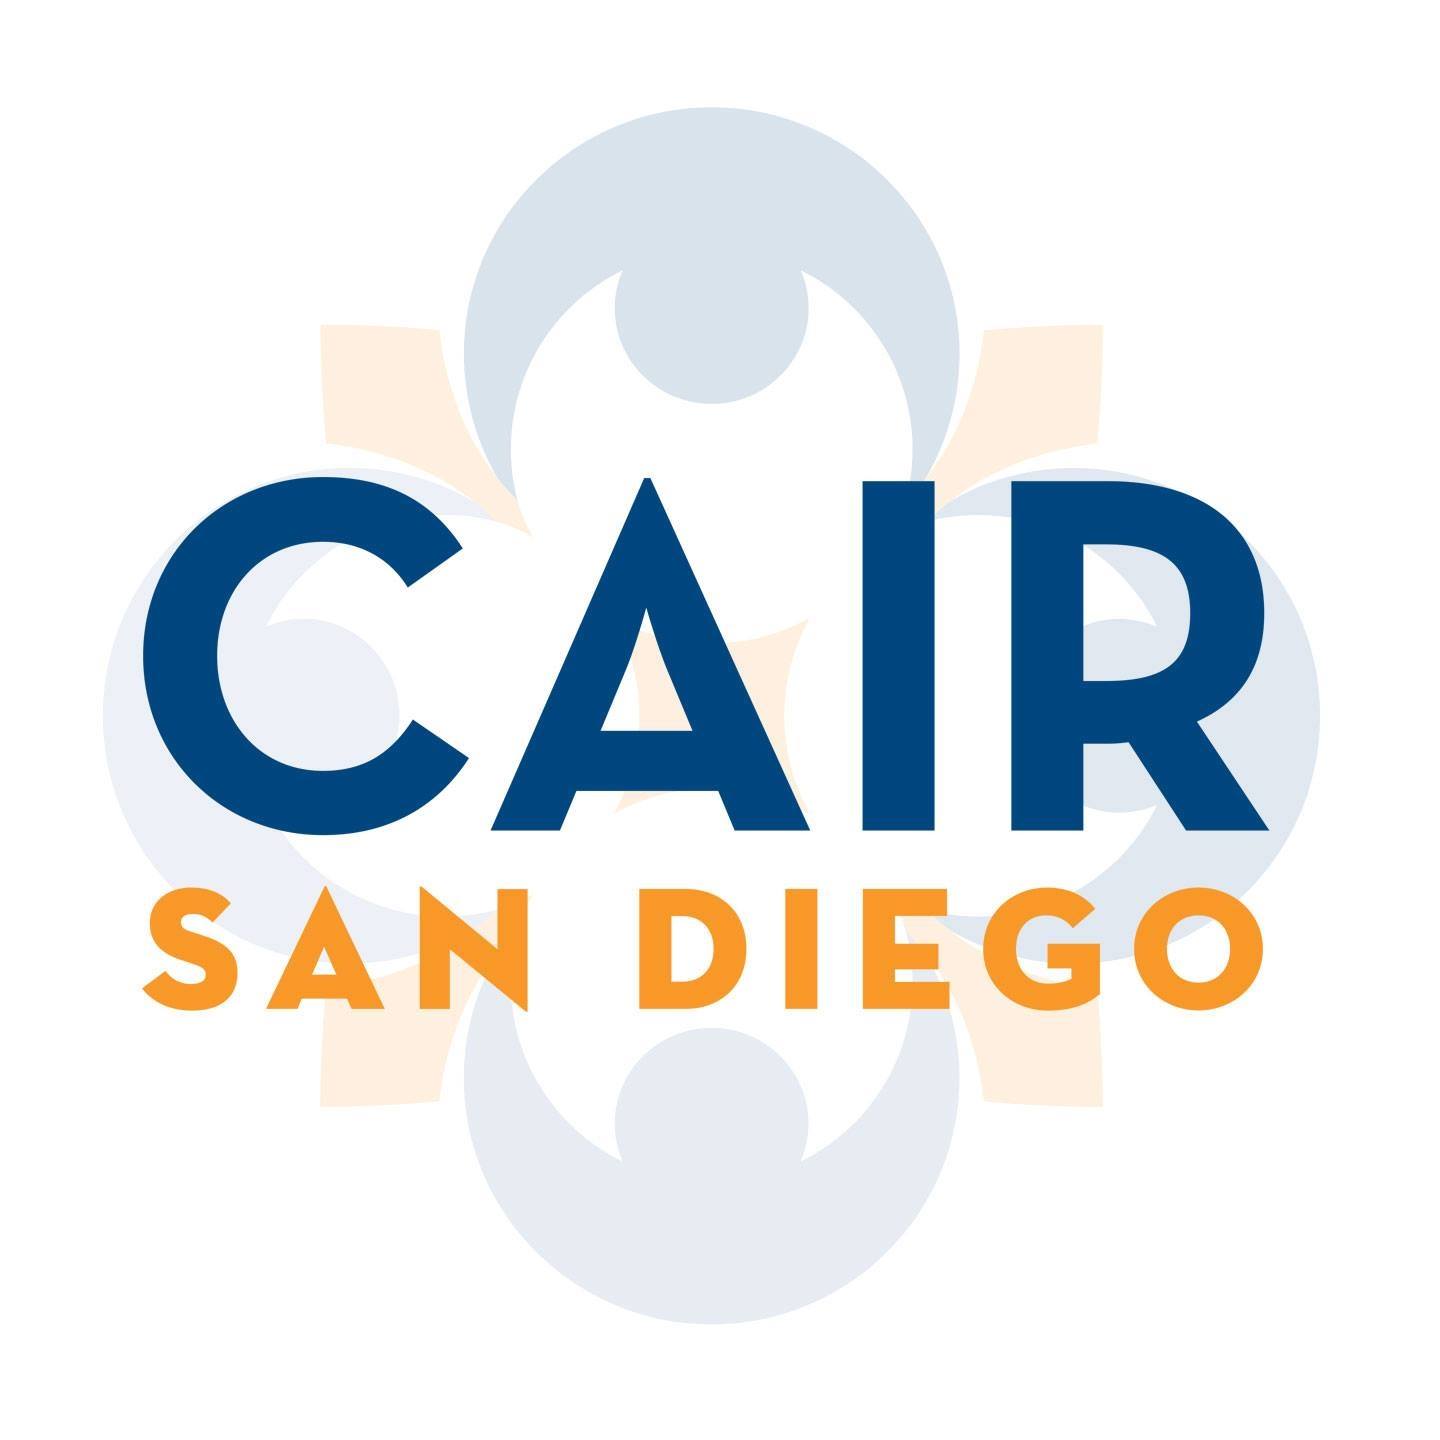 Muslim Organizations in Sacramento California - Council on American-Islamic Relations California San Diego